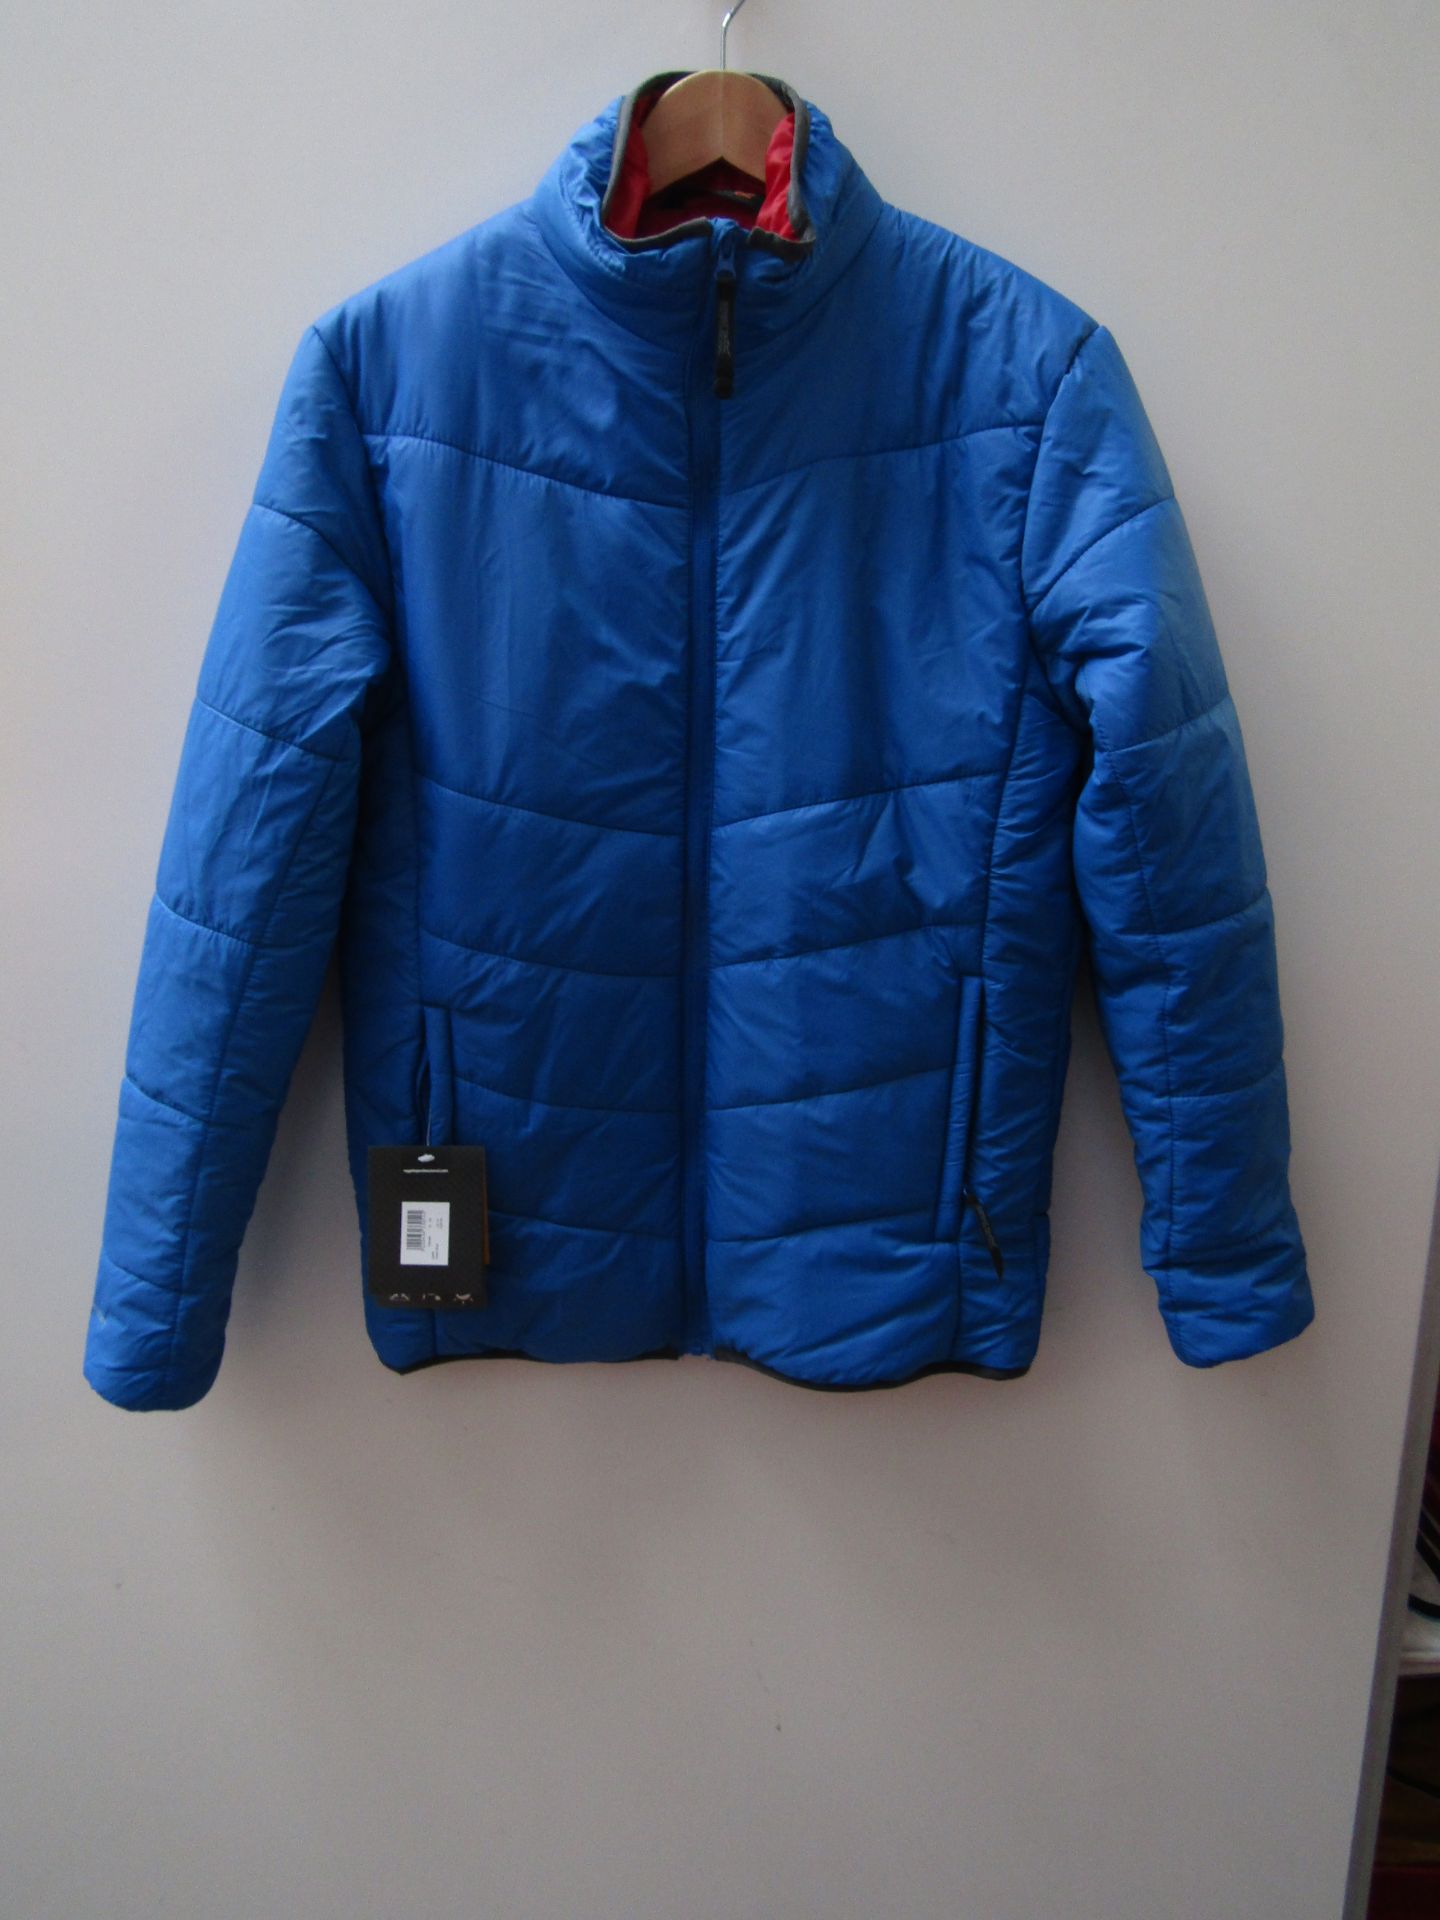 Regatta Professional, jacket Blue 100% Polyamide outer 100% Polyester lining & padding size Large